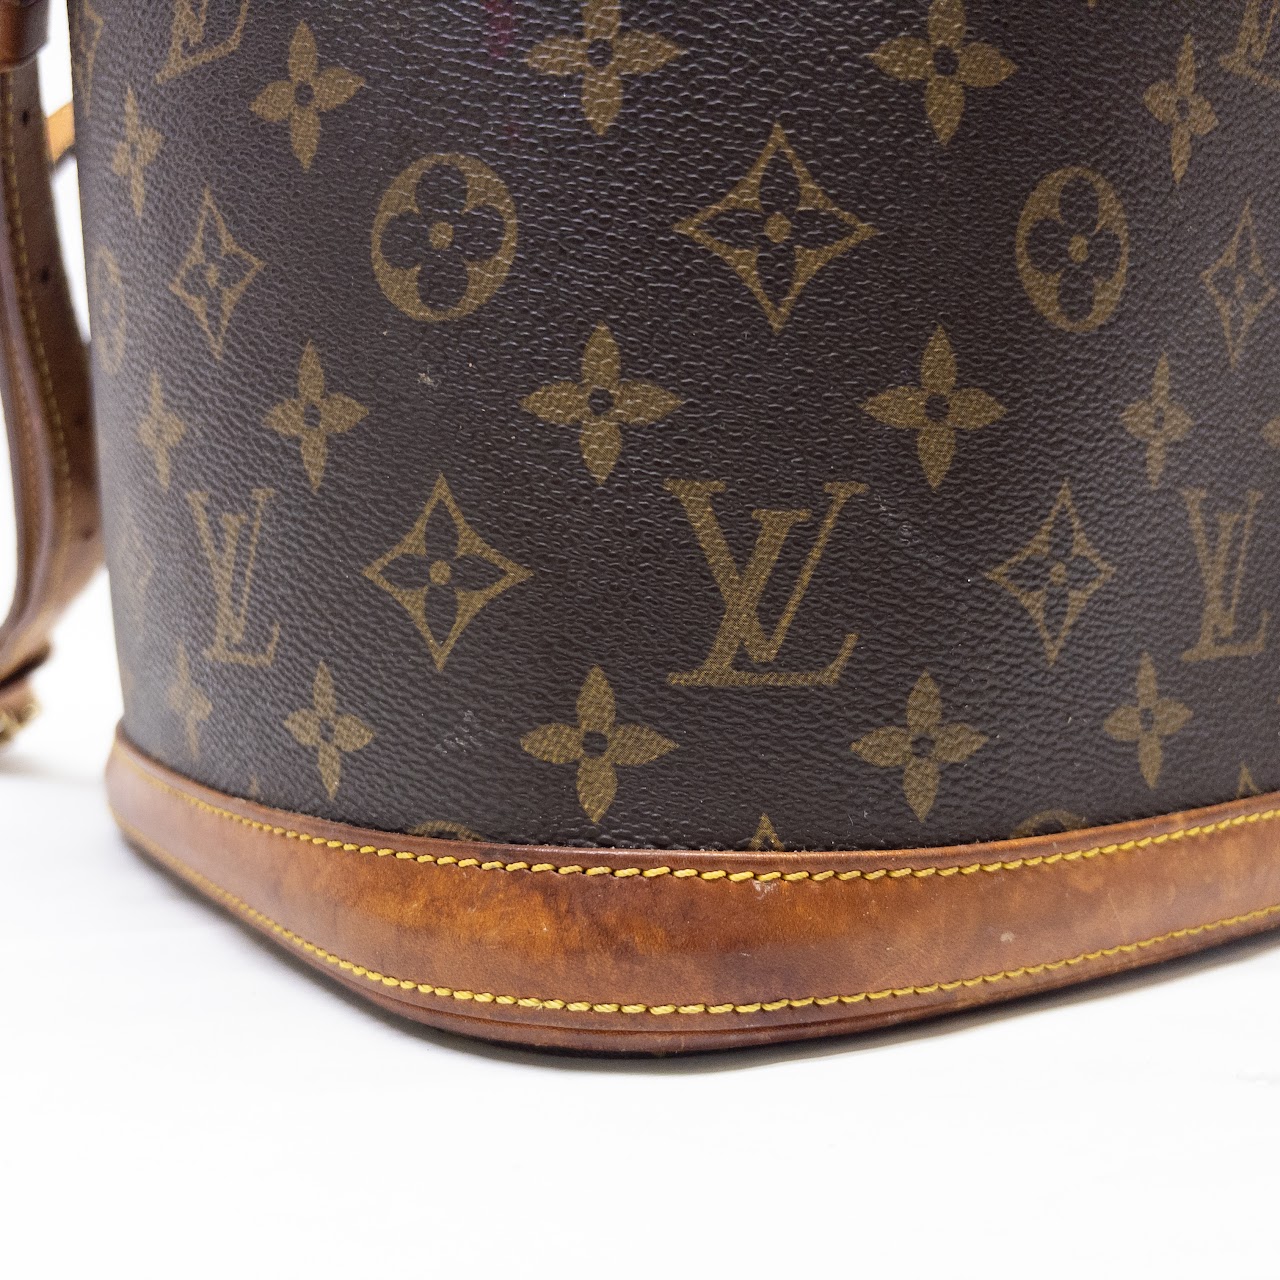 Louis Vuitton Monogram Vanity Case